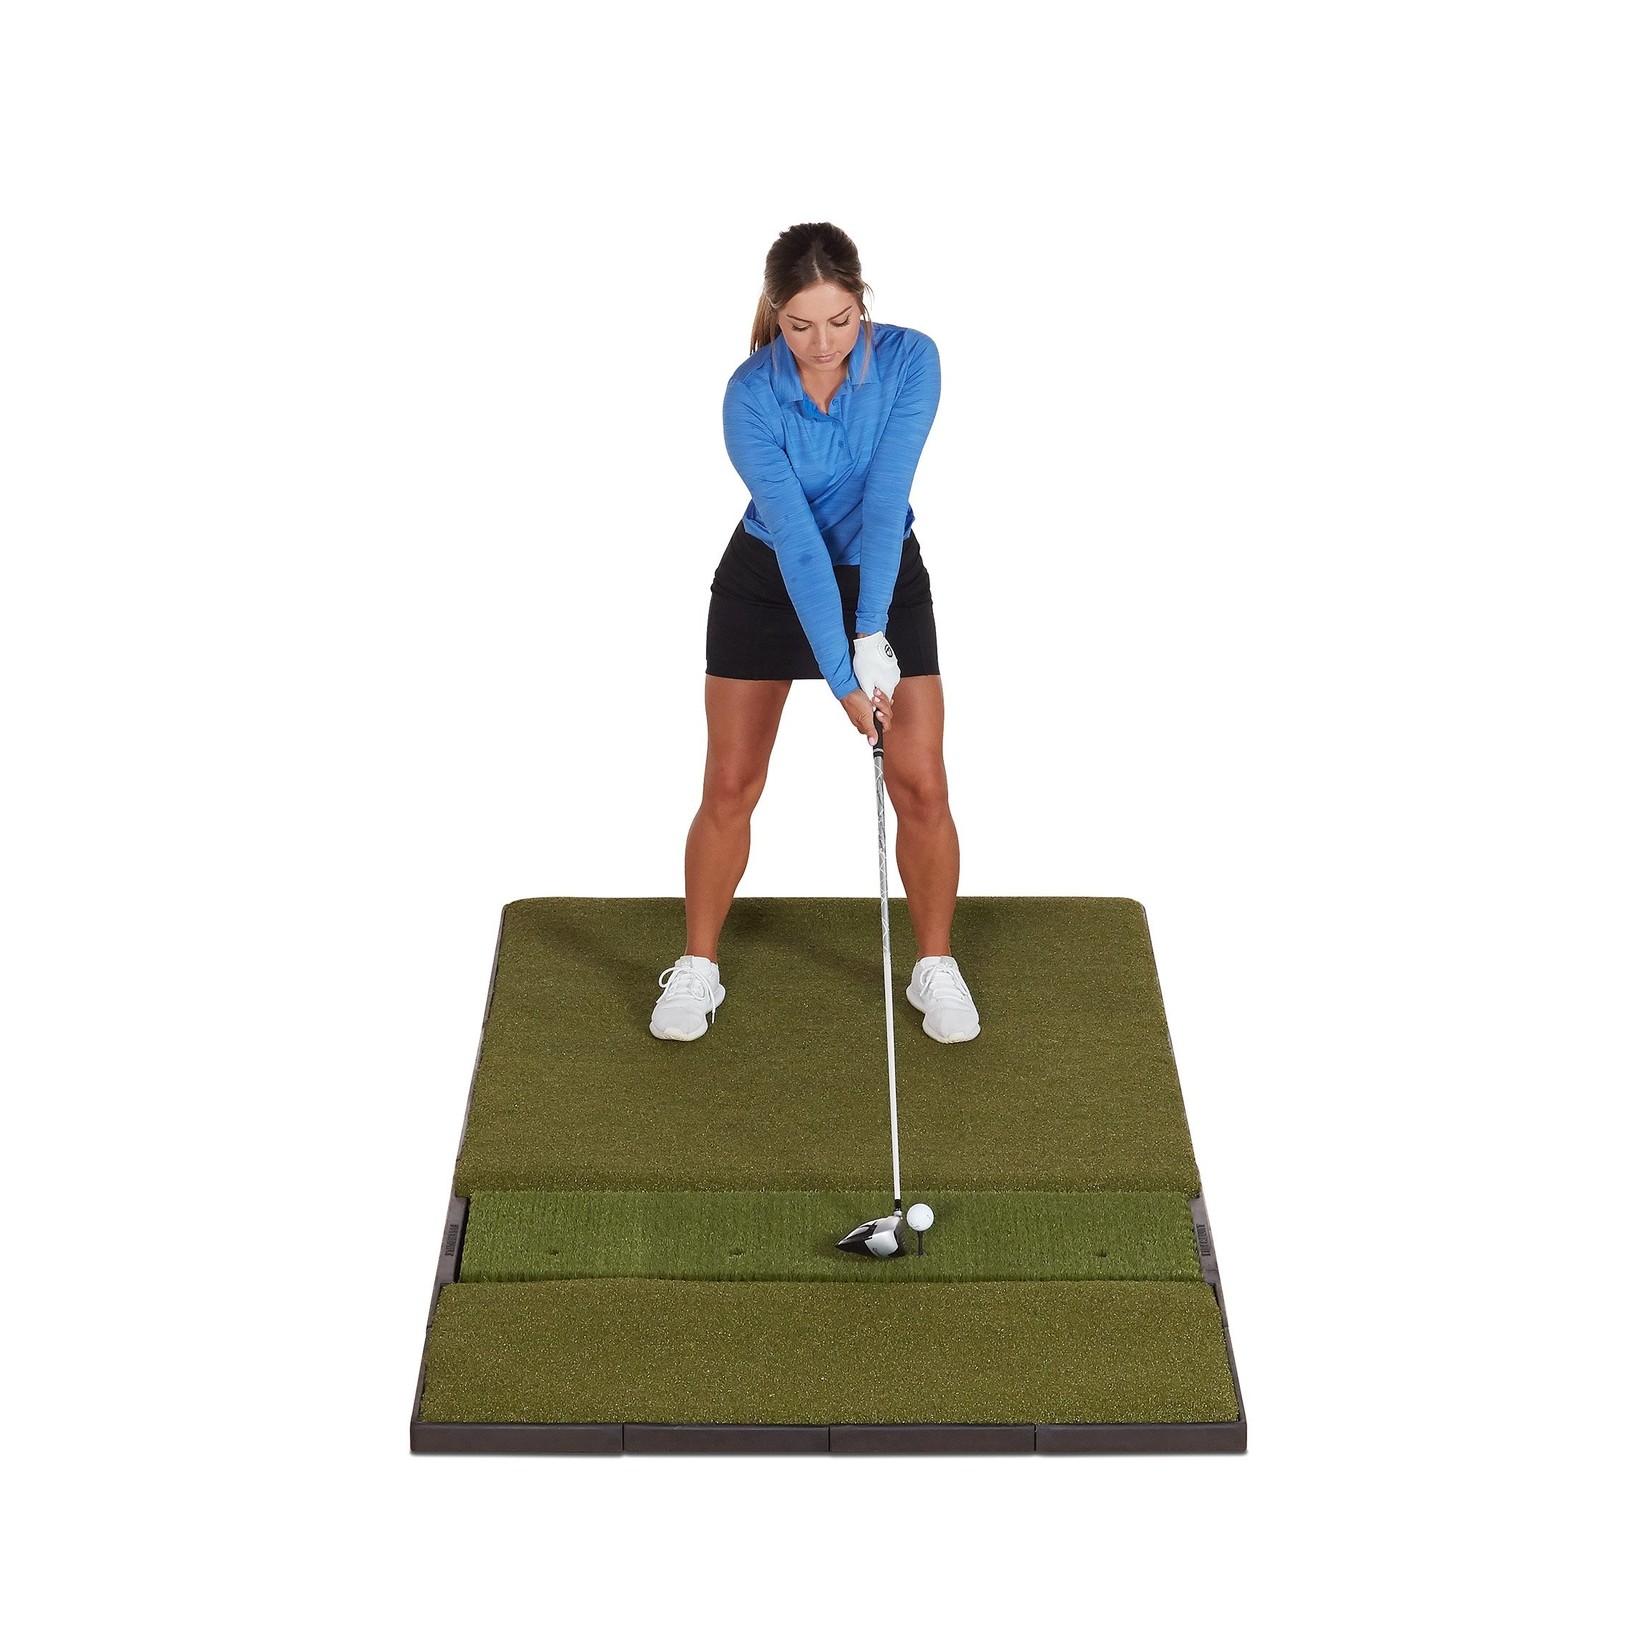 Fiberbuilt Grass Series Studio Golf Mat - Single Hitting - 7'x4'